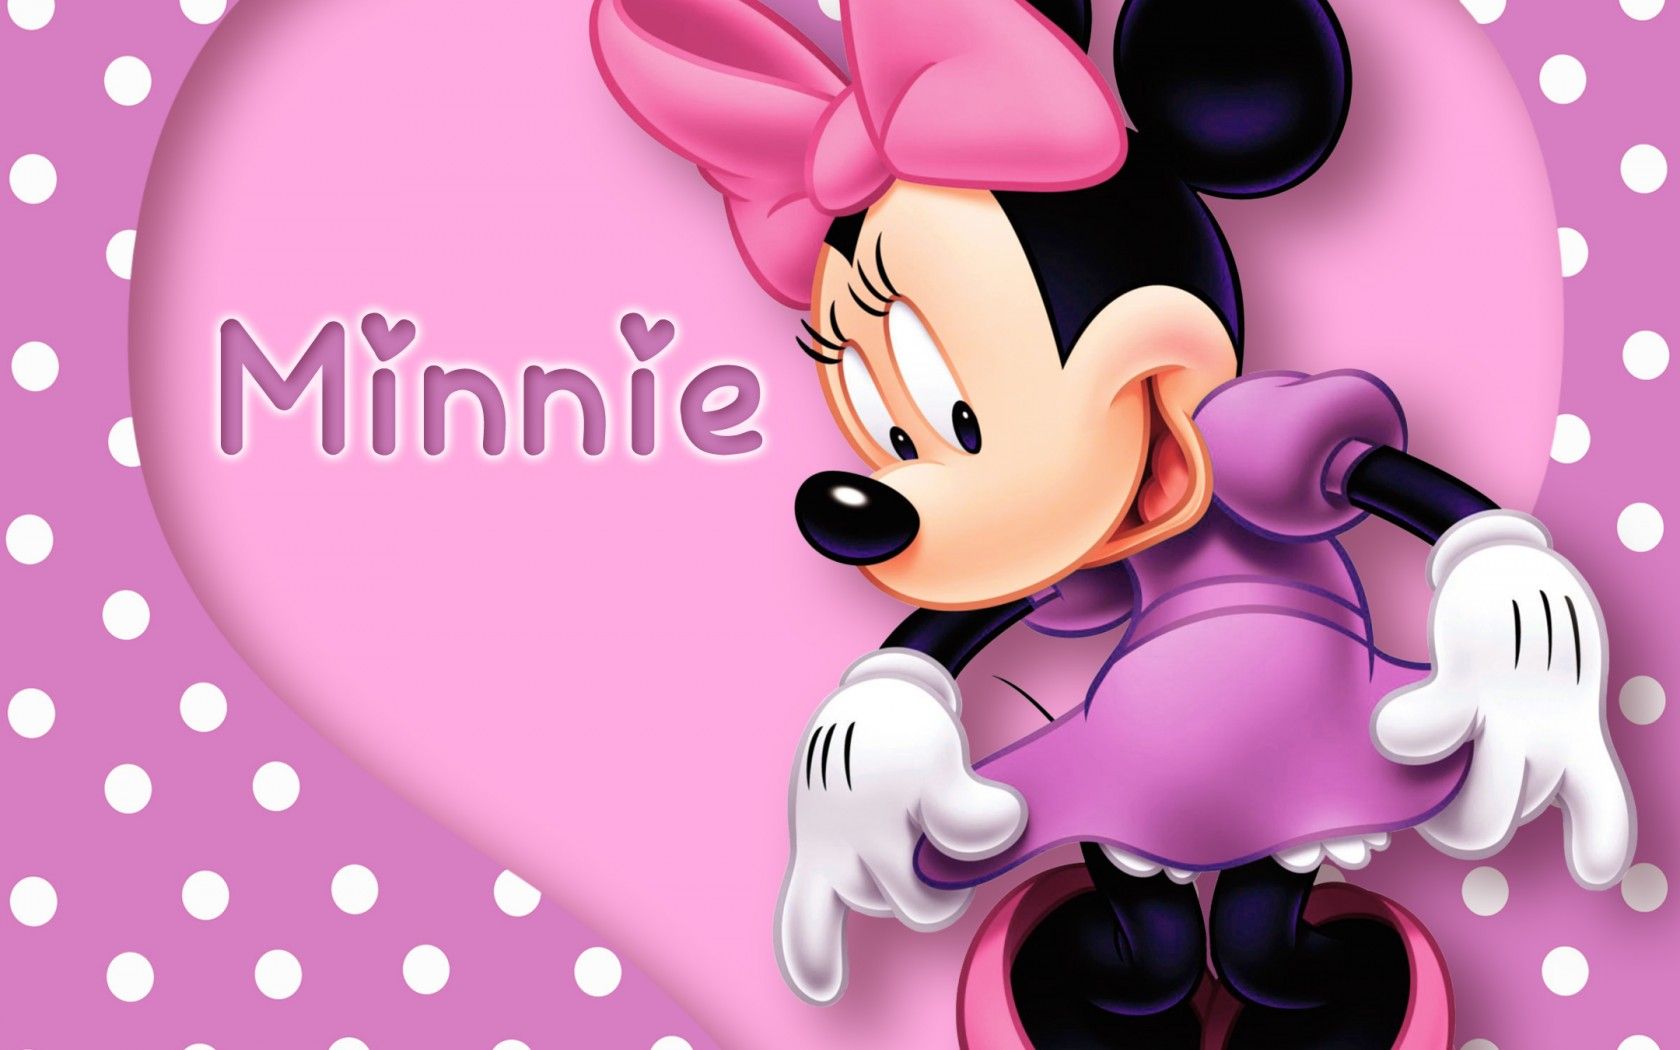 Minnie Wallpaper mouse cartoon disney pink purple polka dots heart